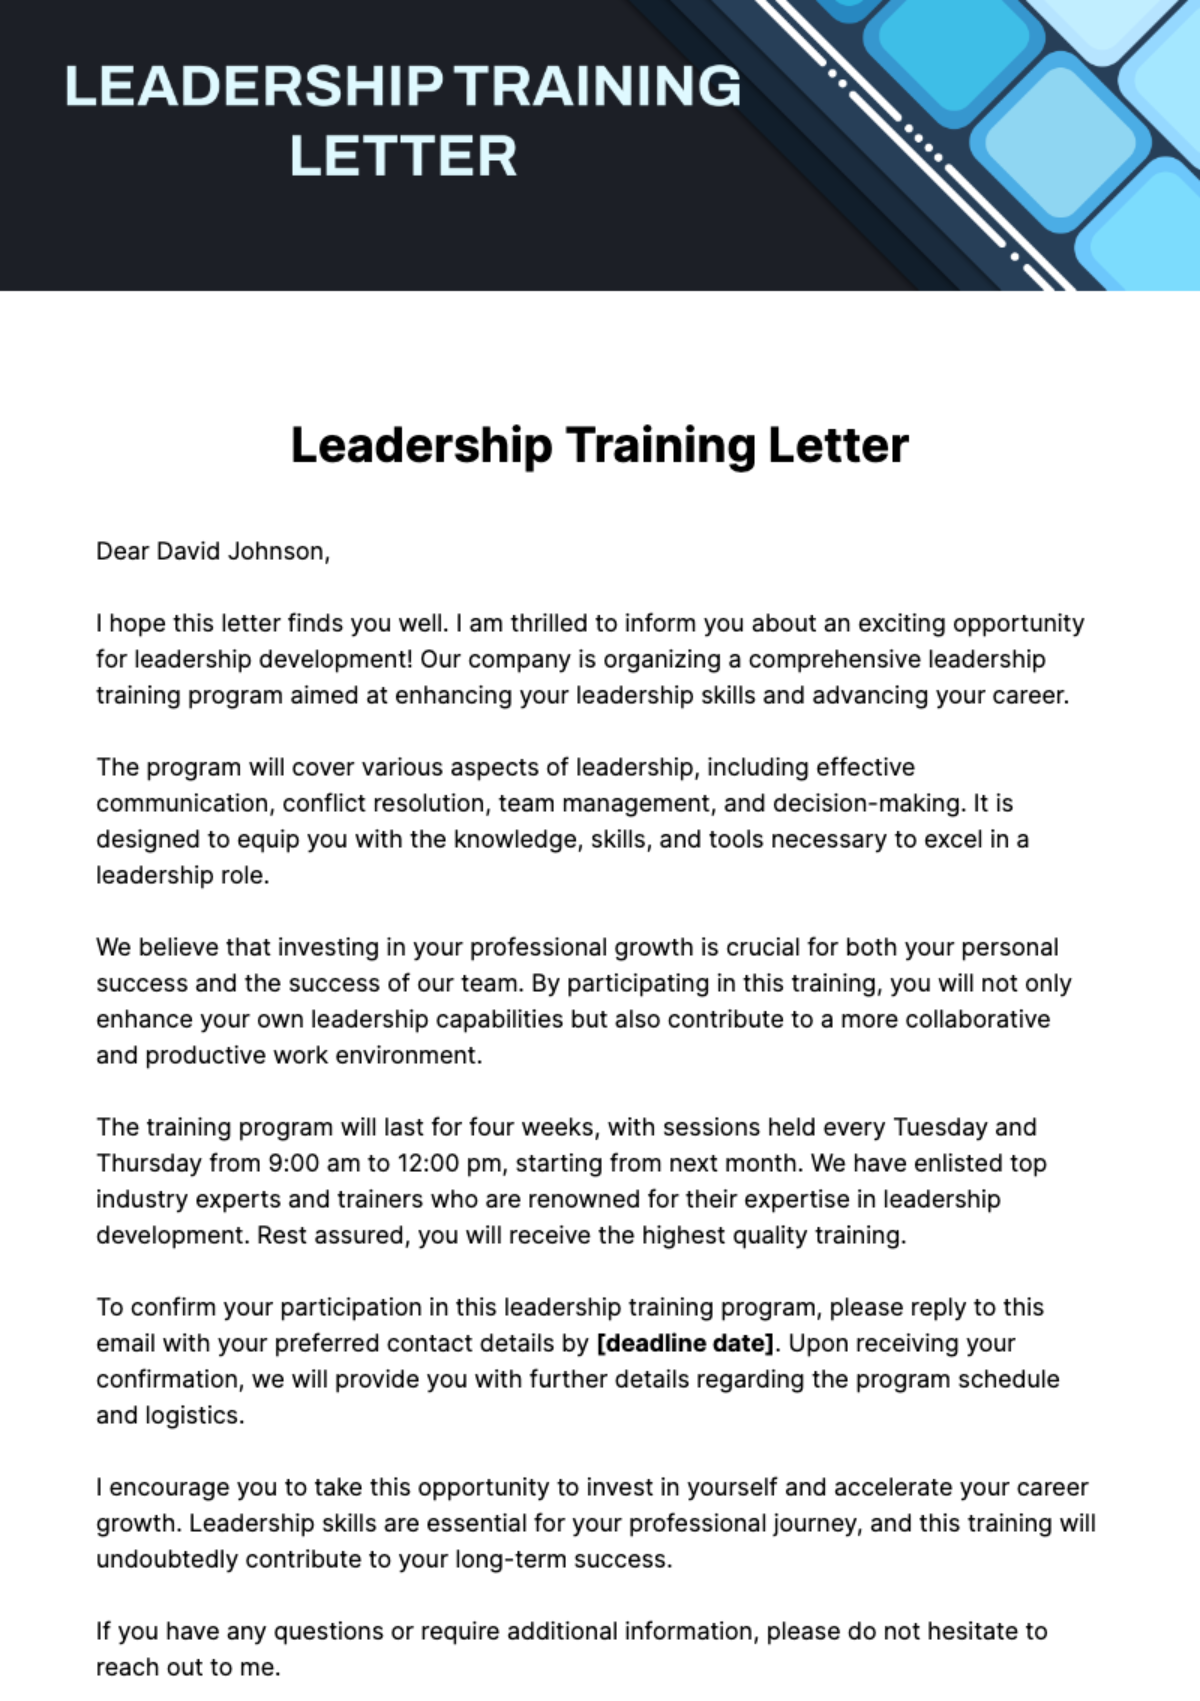 Free Leadership Training Letter Template